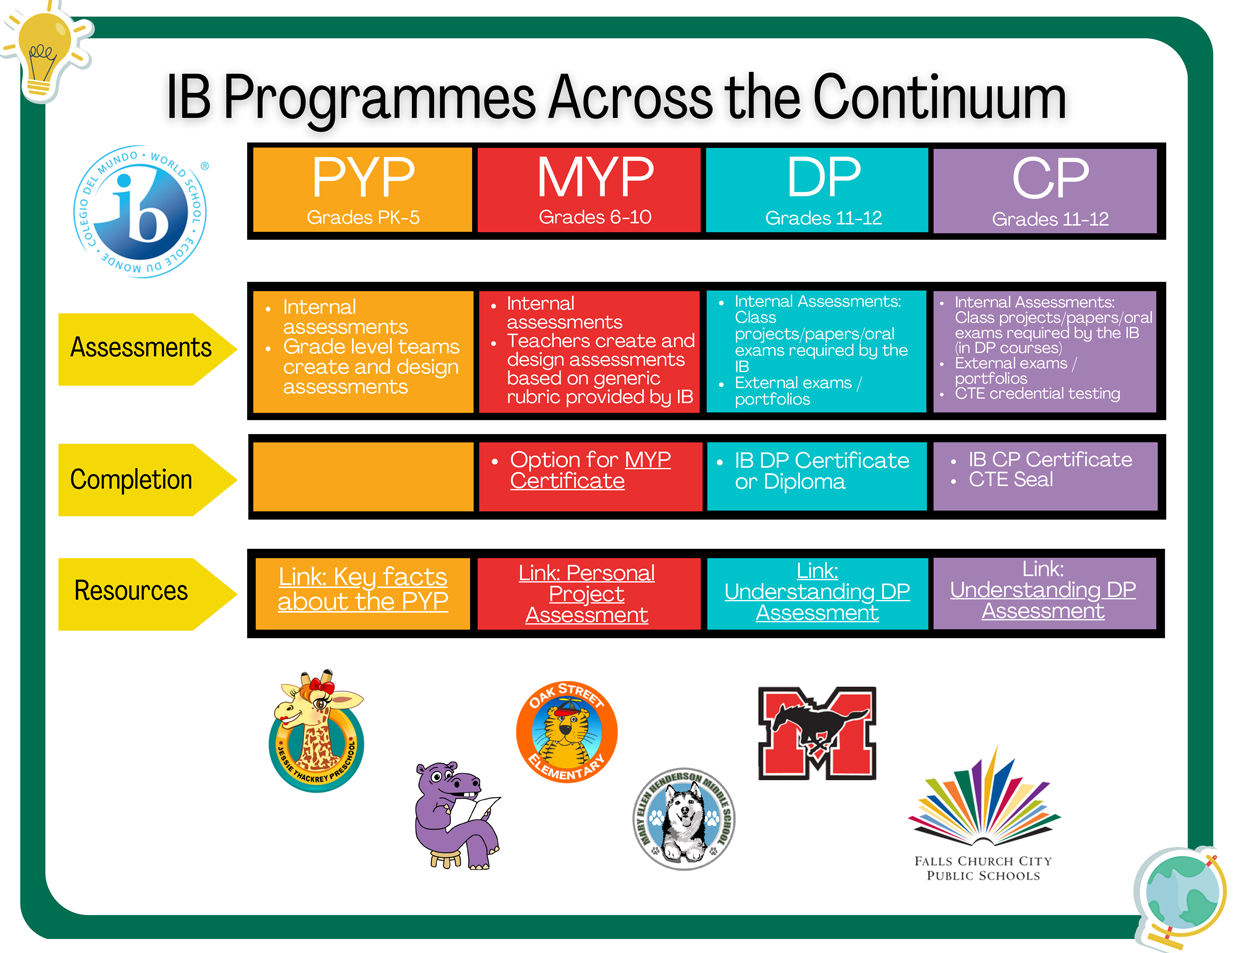 IB Programmes Across the Continuum